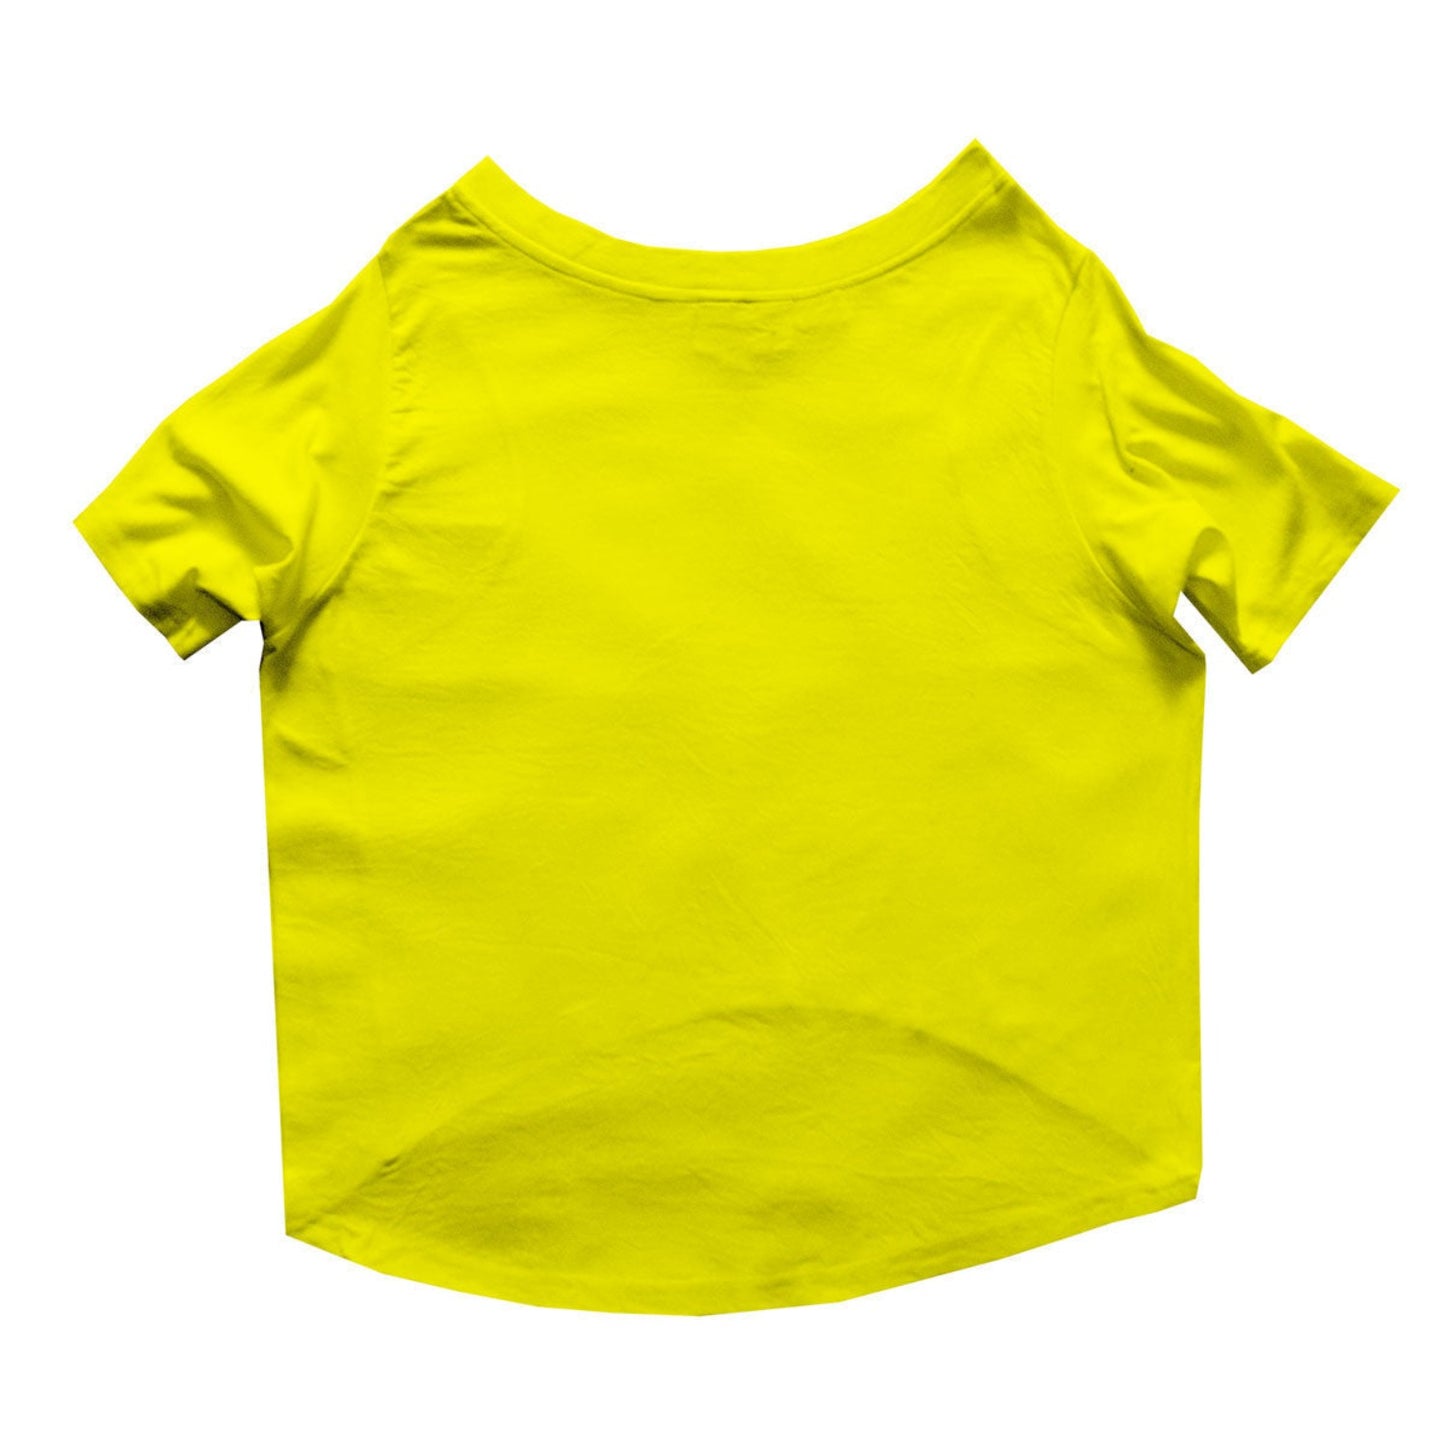 Ruse / Yellow Ruse Basic Crew Neck "8-BIT JUMP" Printed Half Sleeves Dog Tee18